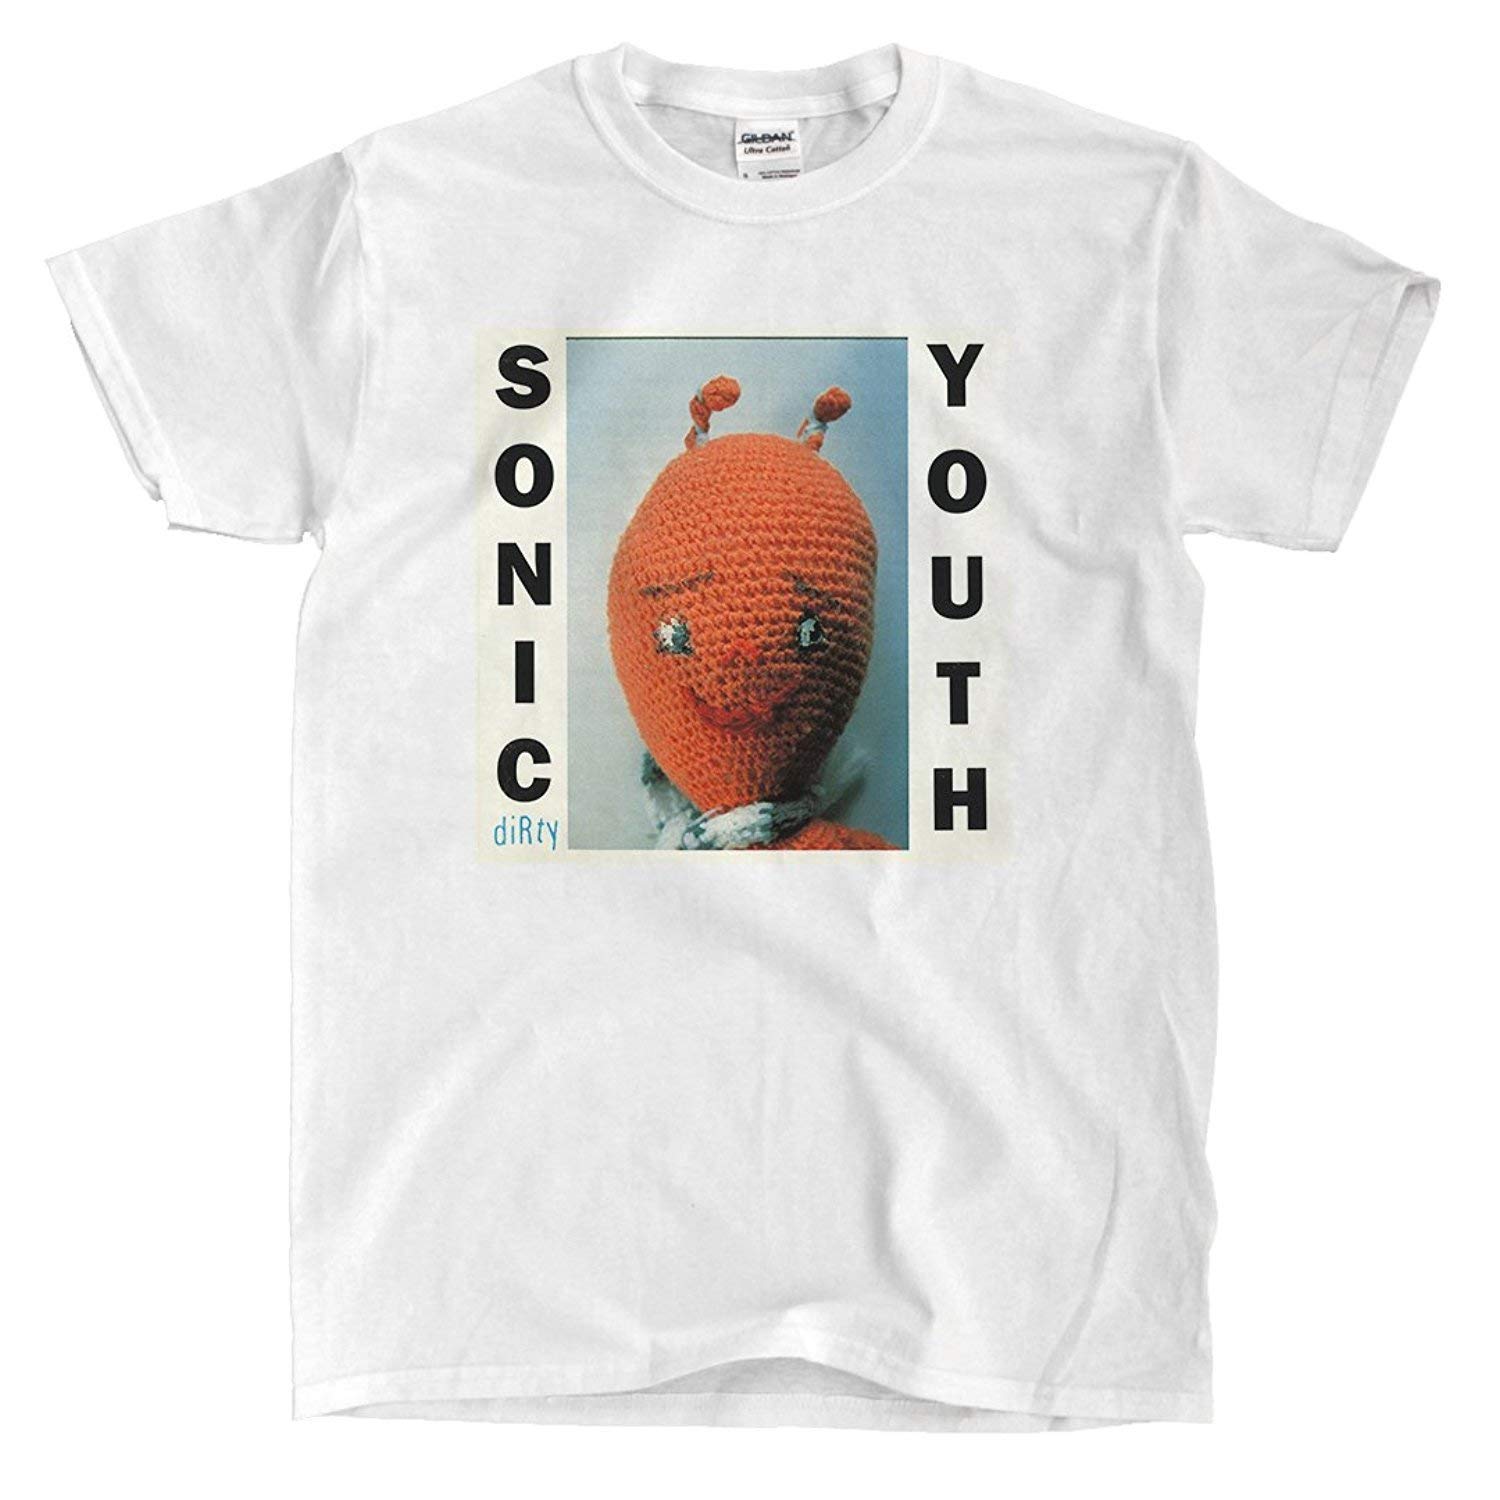 Sonic Youth - Dirty - White T-Shirt (s) | Amazon.com